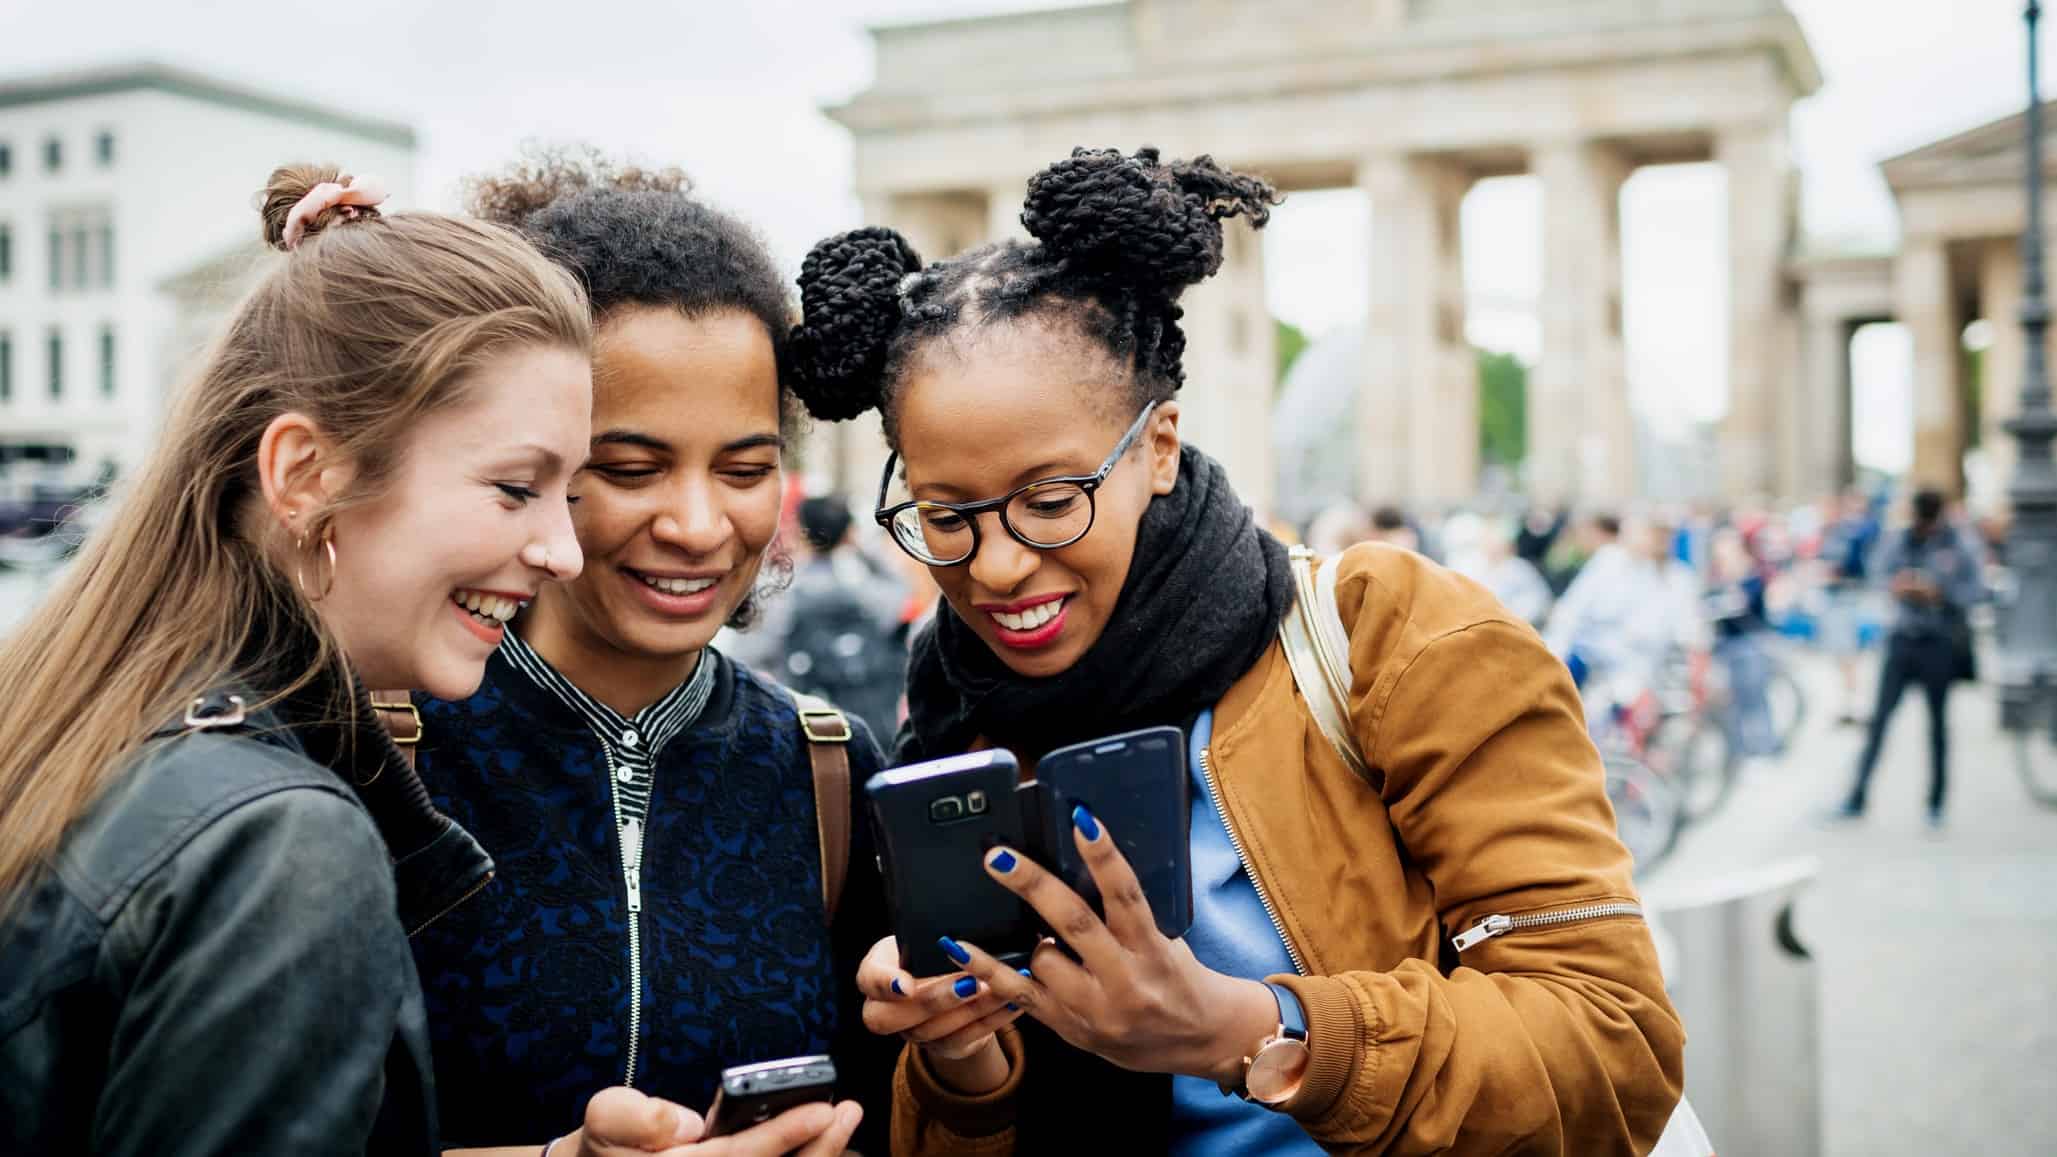 three women with smartphone technology in European street scene